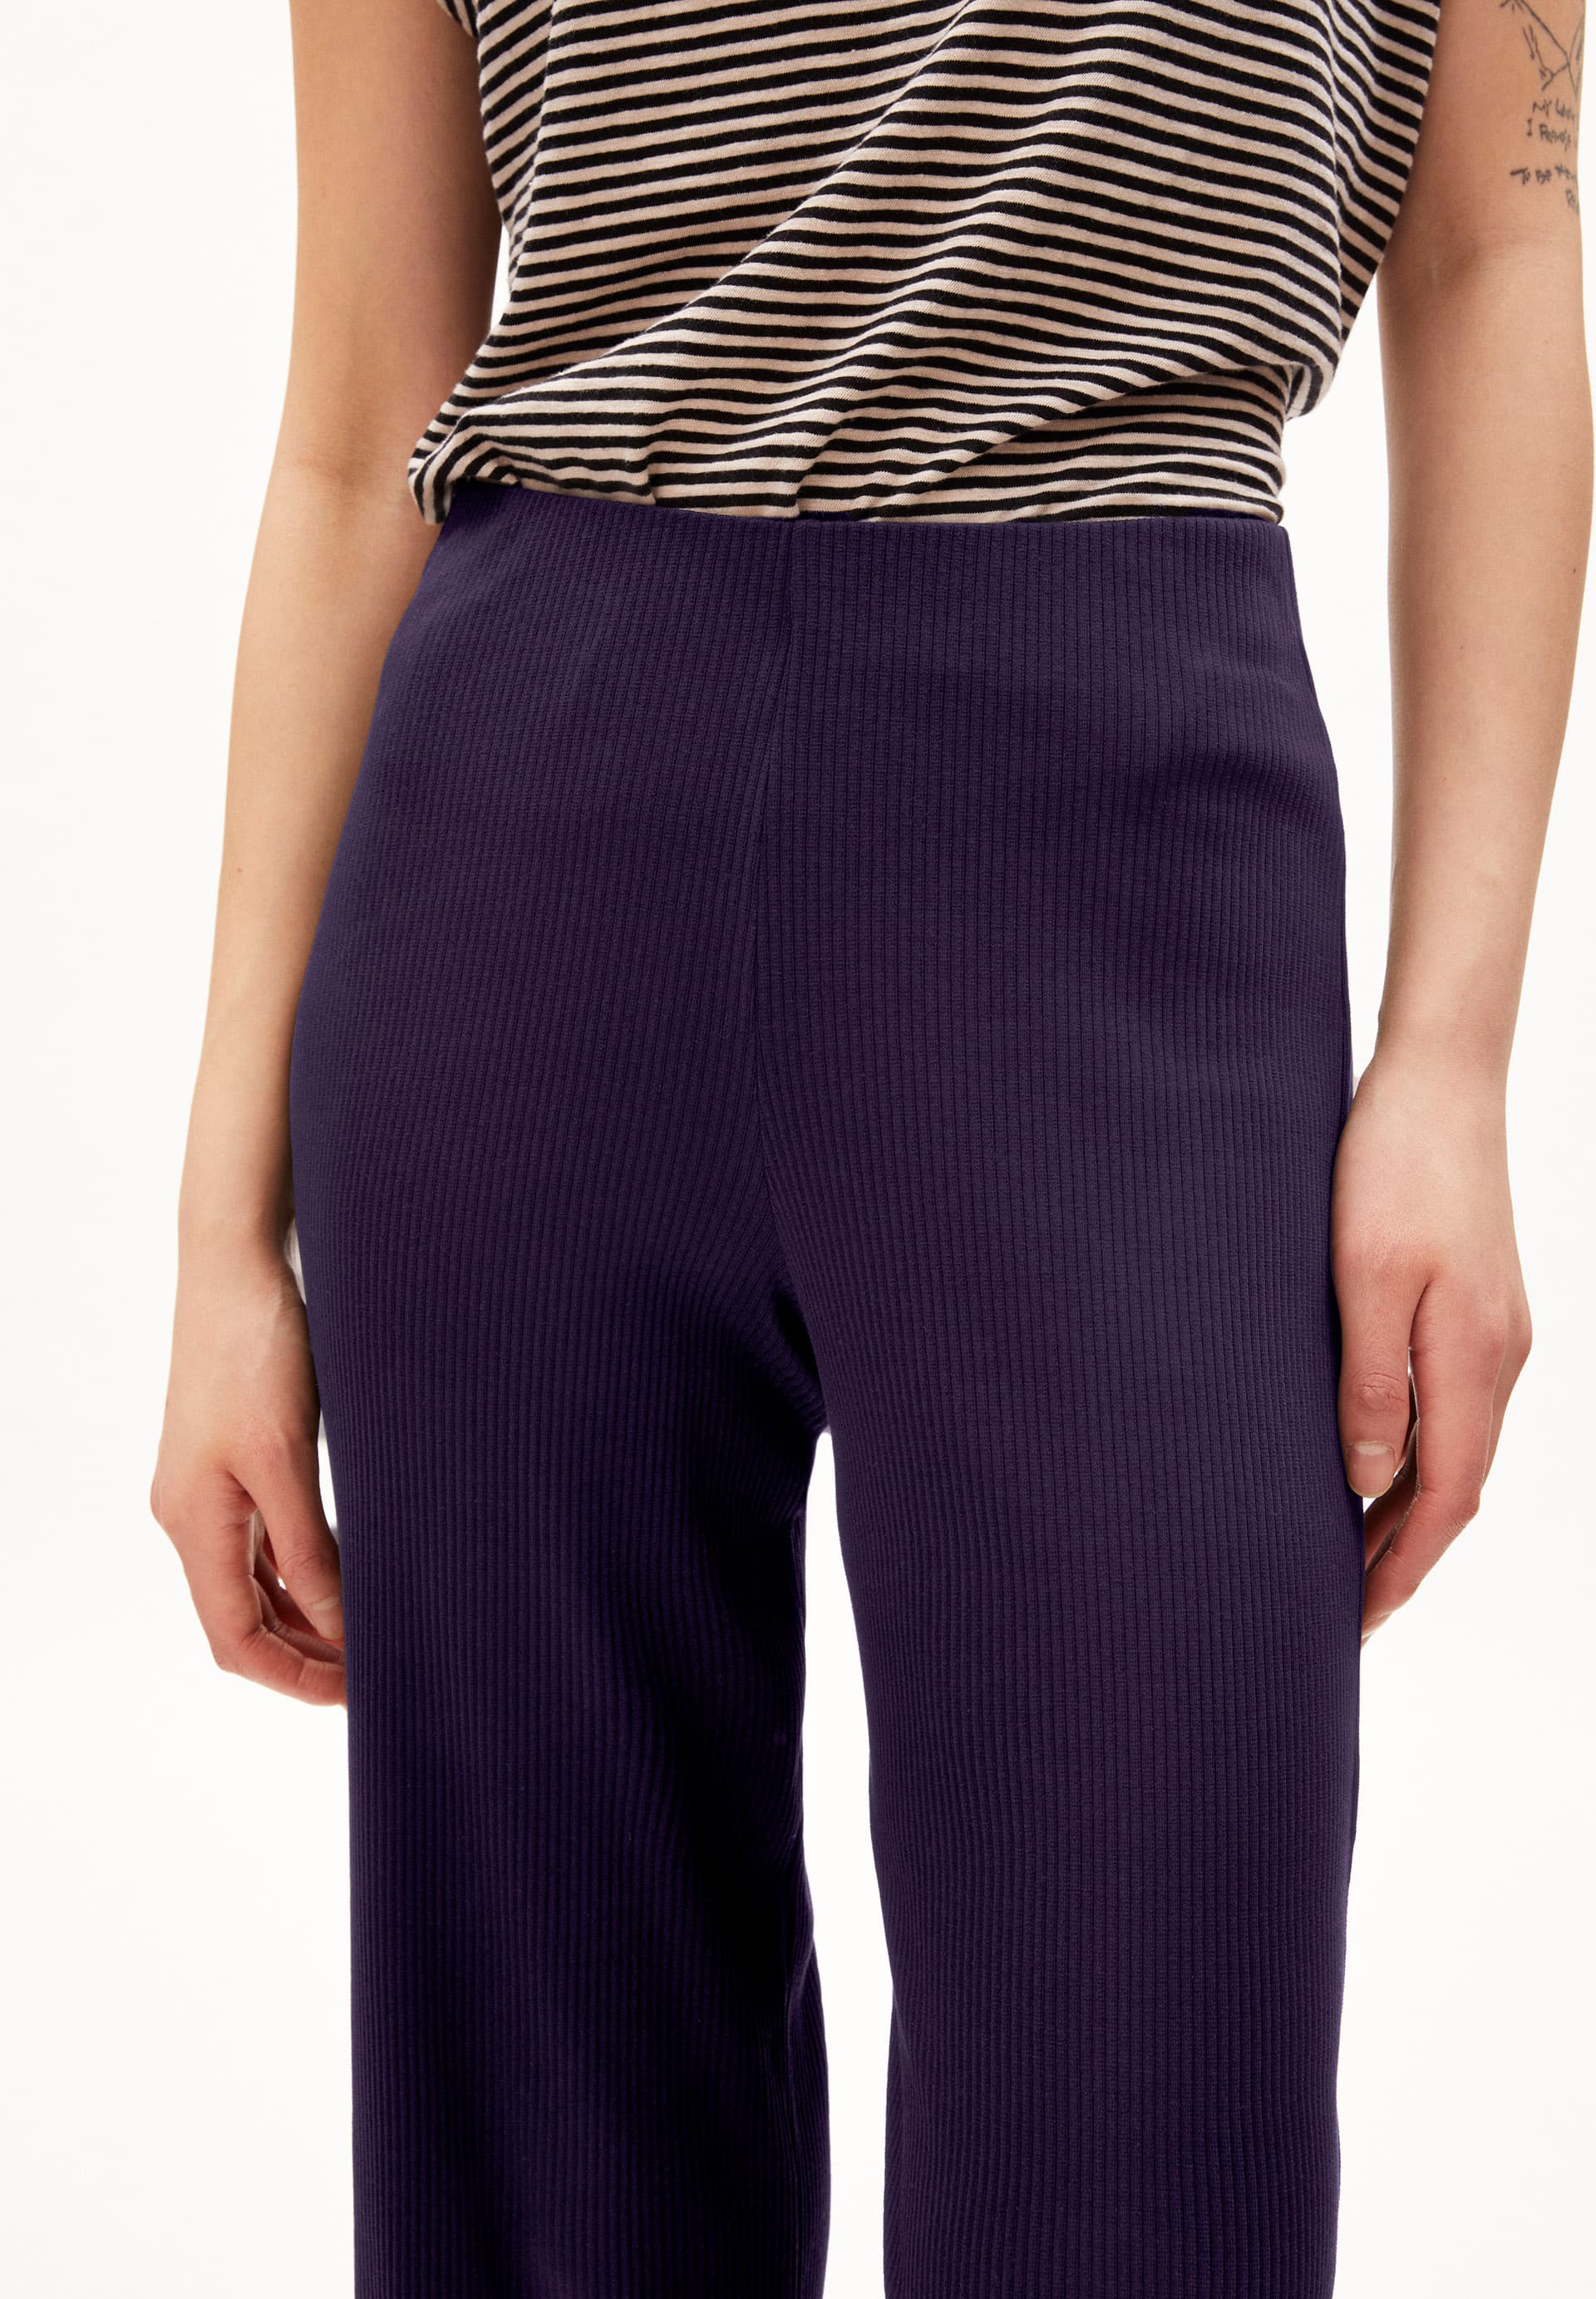 NIAAN Rib-Jersey Pants made of Organic Cotton Mix